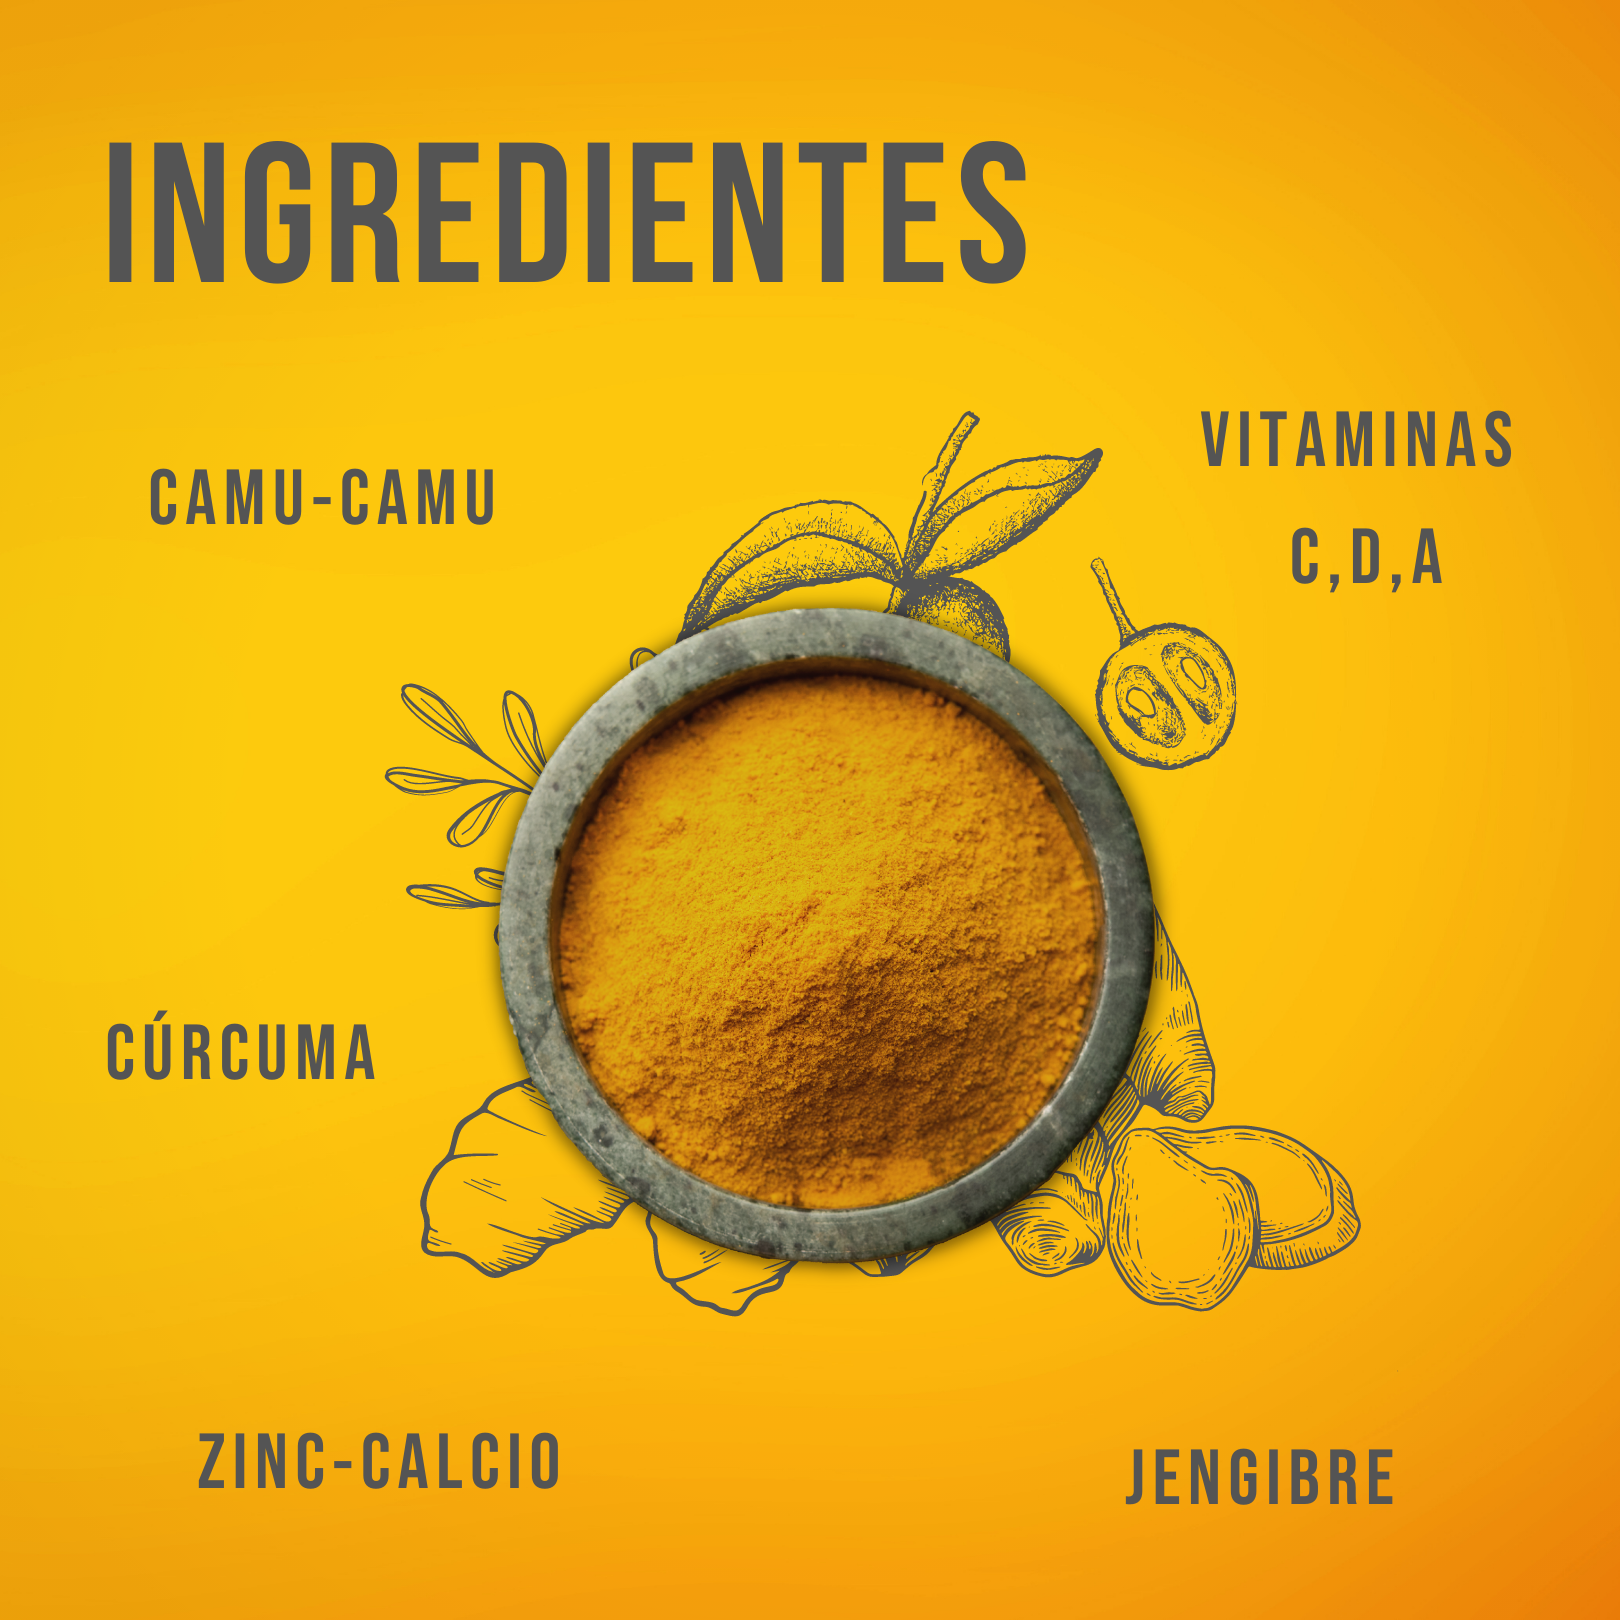 Kotai Bro Veganas con cúrcuma, jengibre, Camu-Camu y  Vitaminas (C,D,A) (sistema inmune y antioxidante)